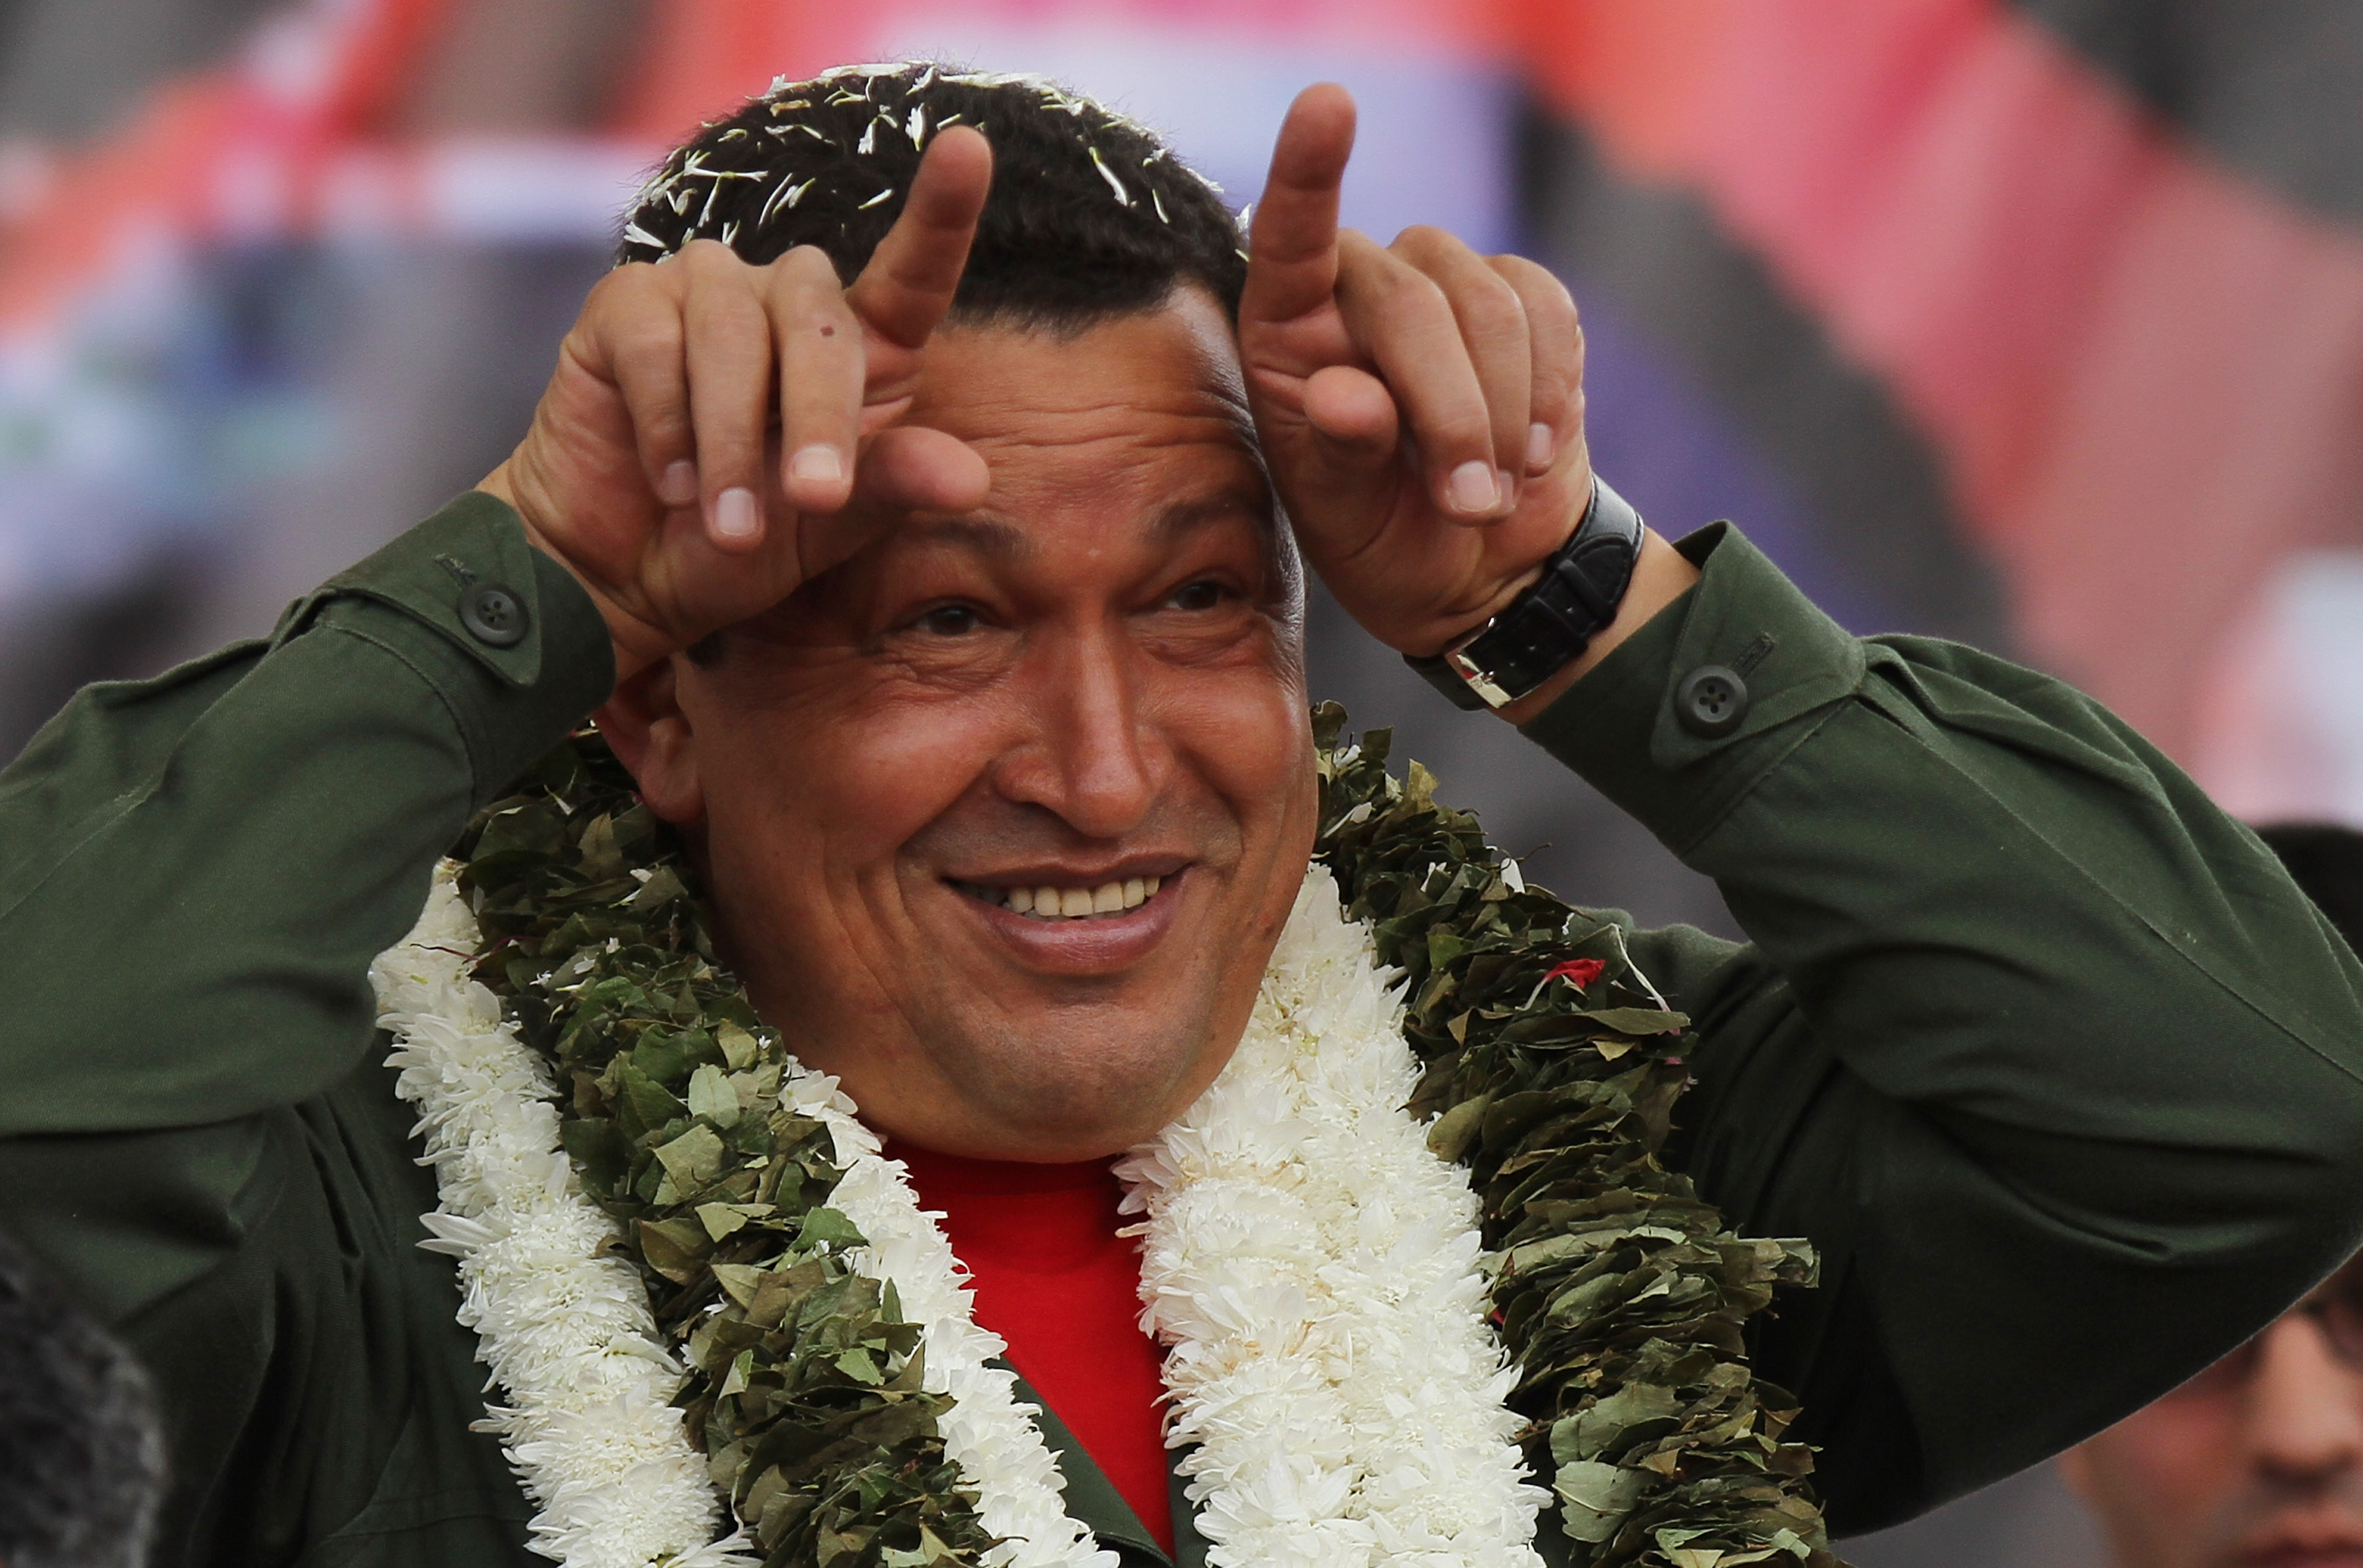 Venezuela, Brott och straff, Hugo Chavez, Polisen, Kritik